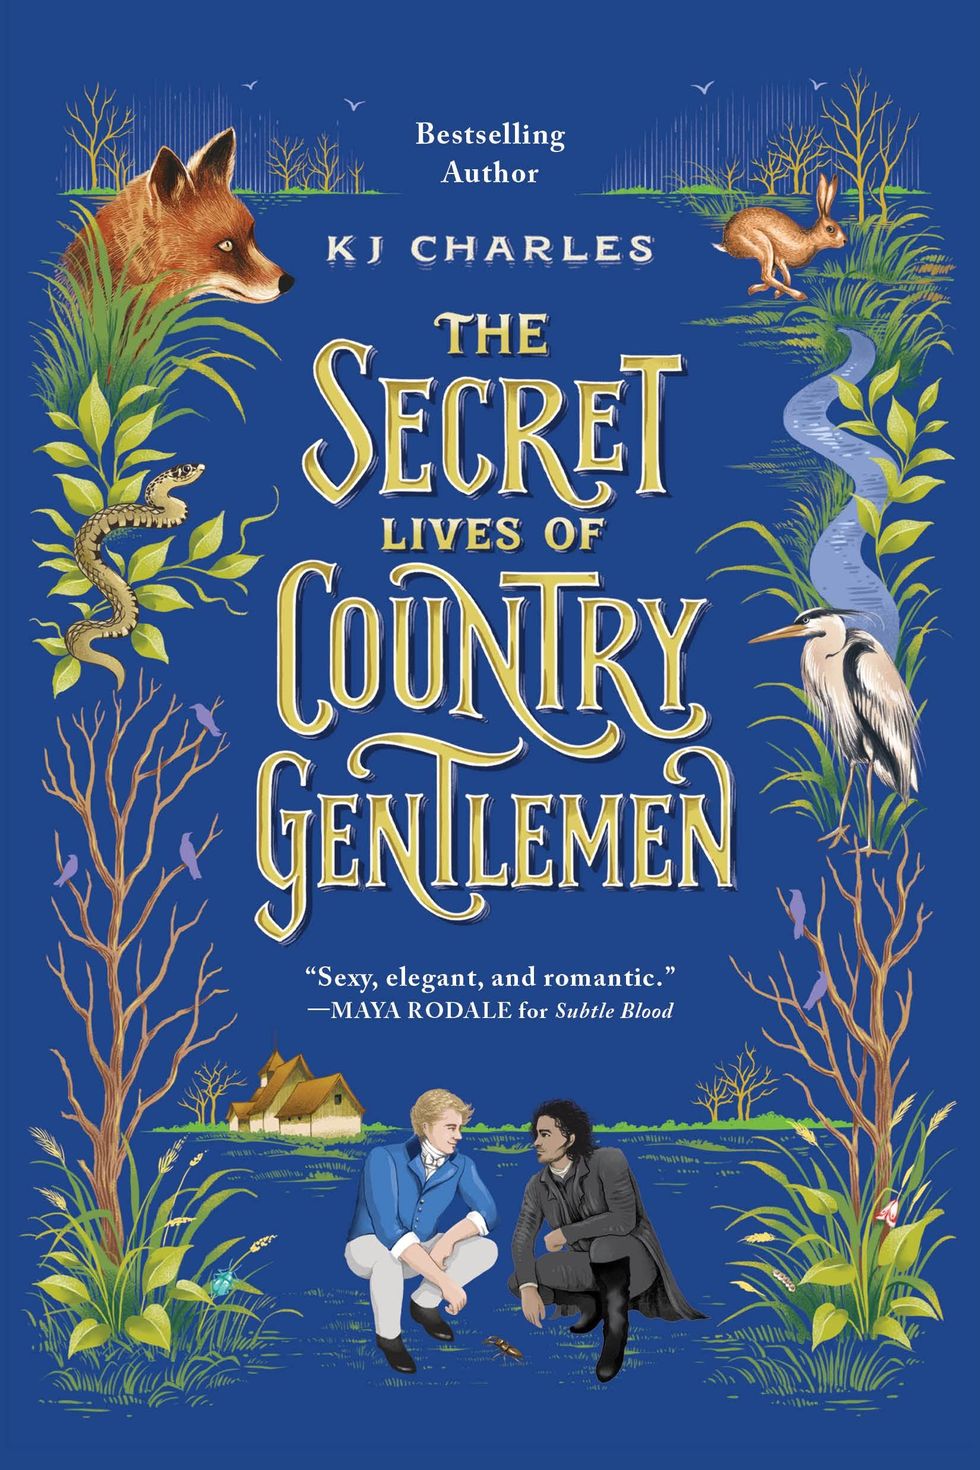 'The Secret Lives of Country Gentlemen' by KJ Charles